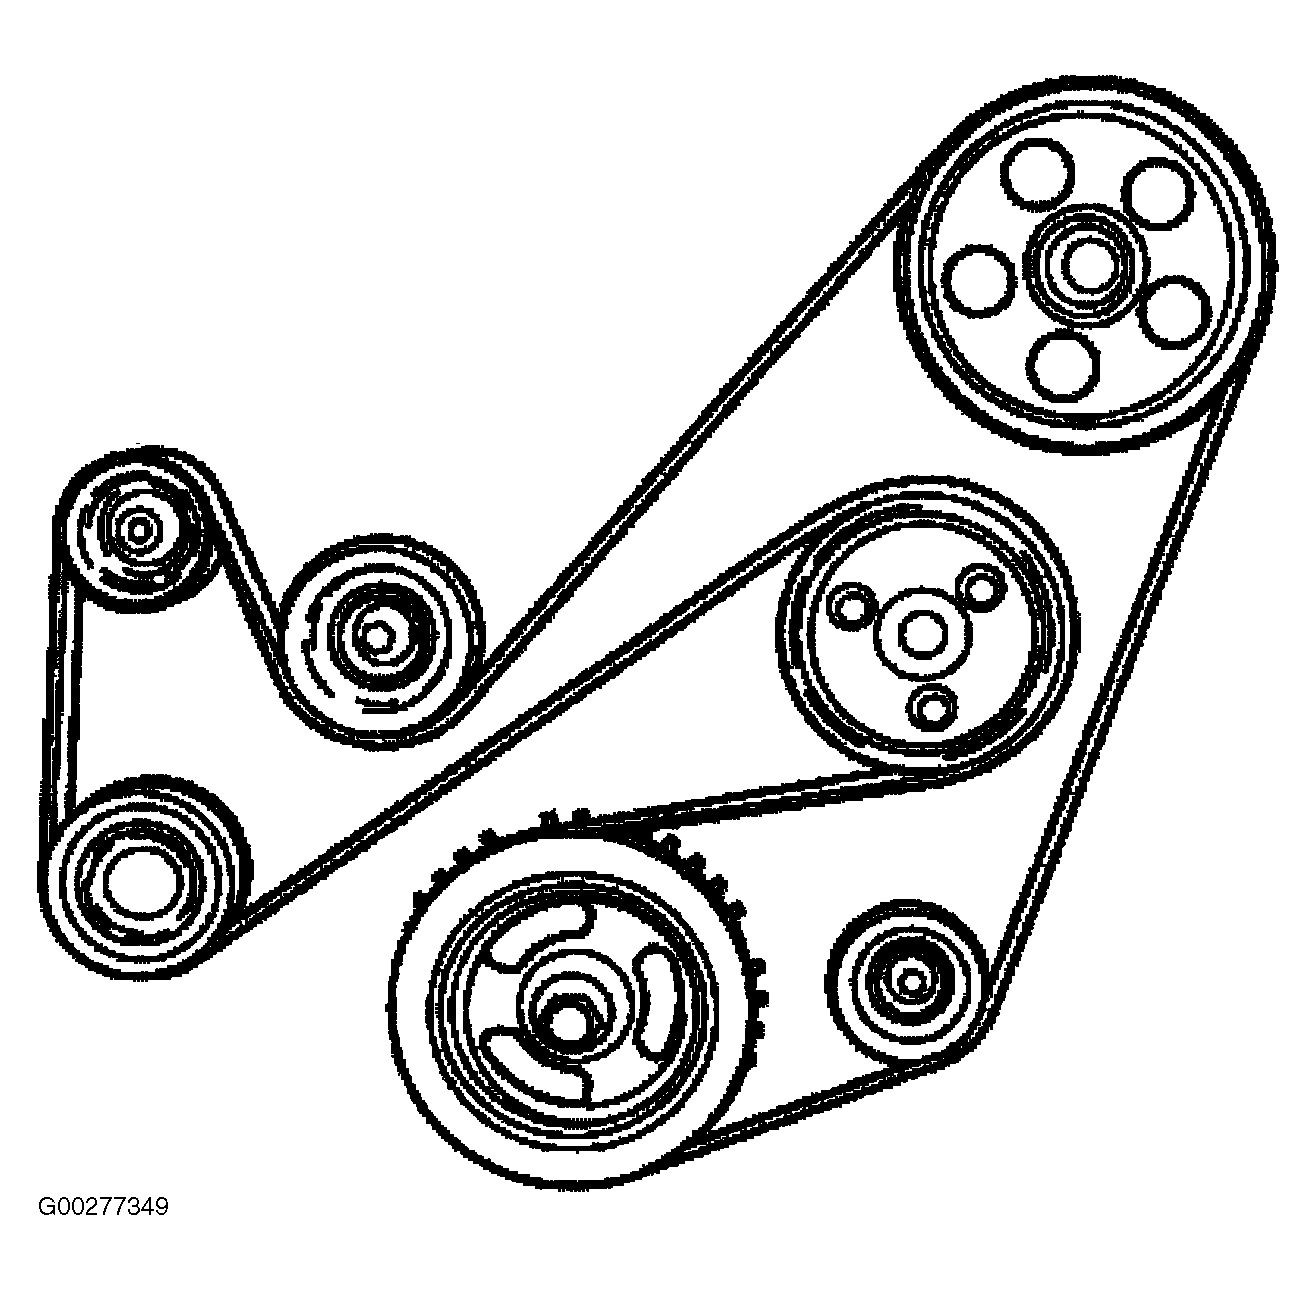 2005 ford focus zx4 belt diagram